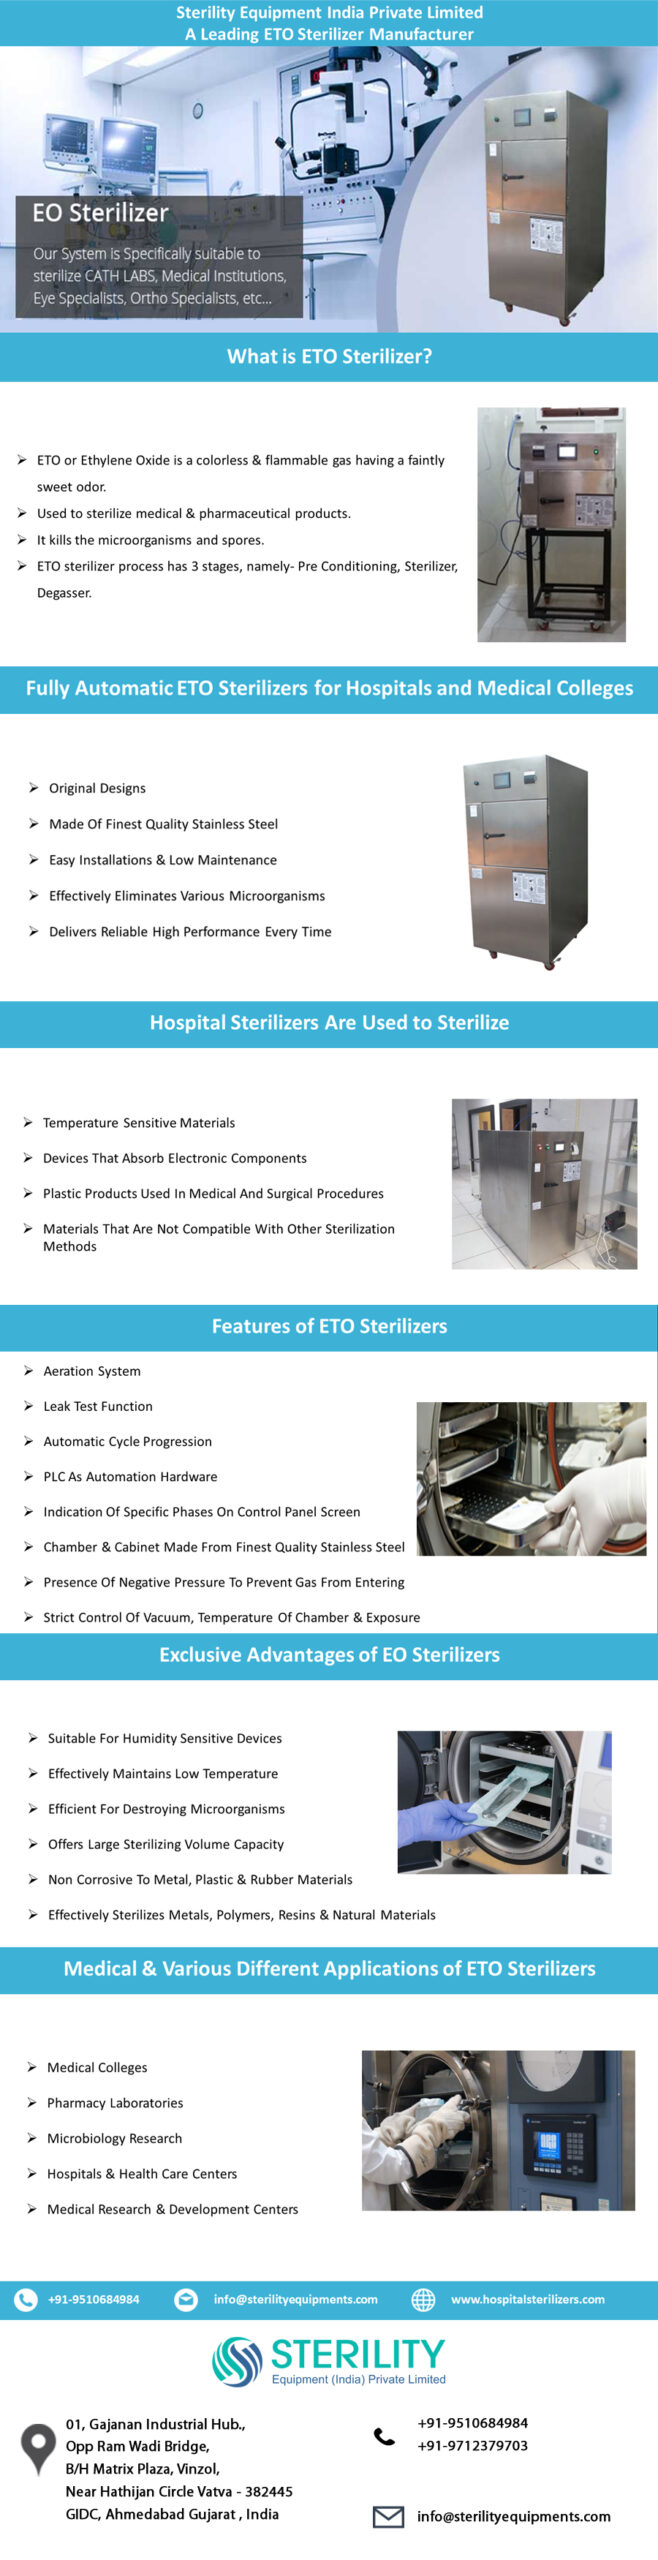 sterility equipment india private limited a leading eto sterilizer manufacturer